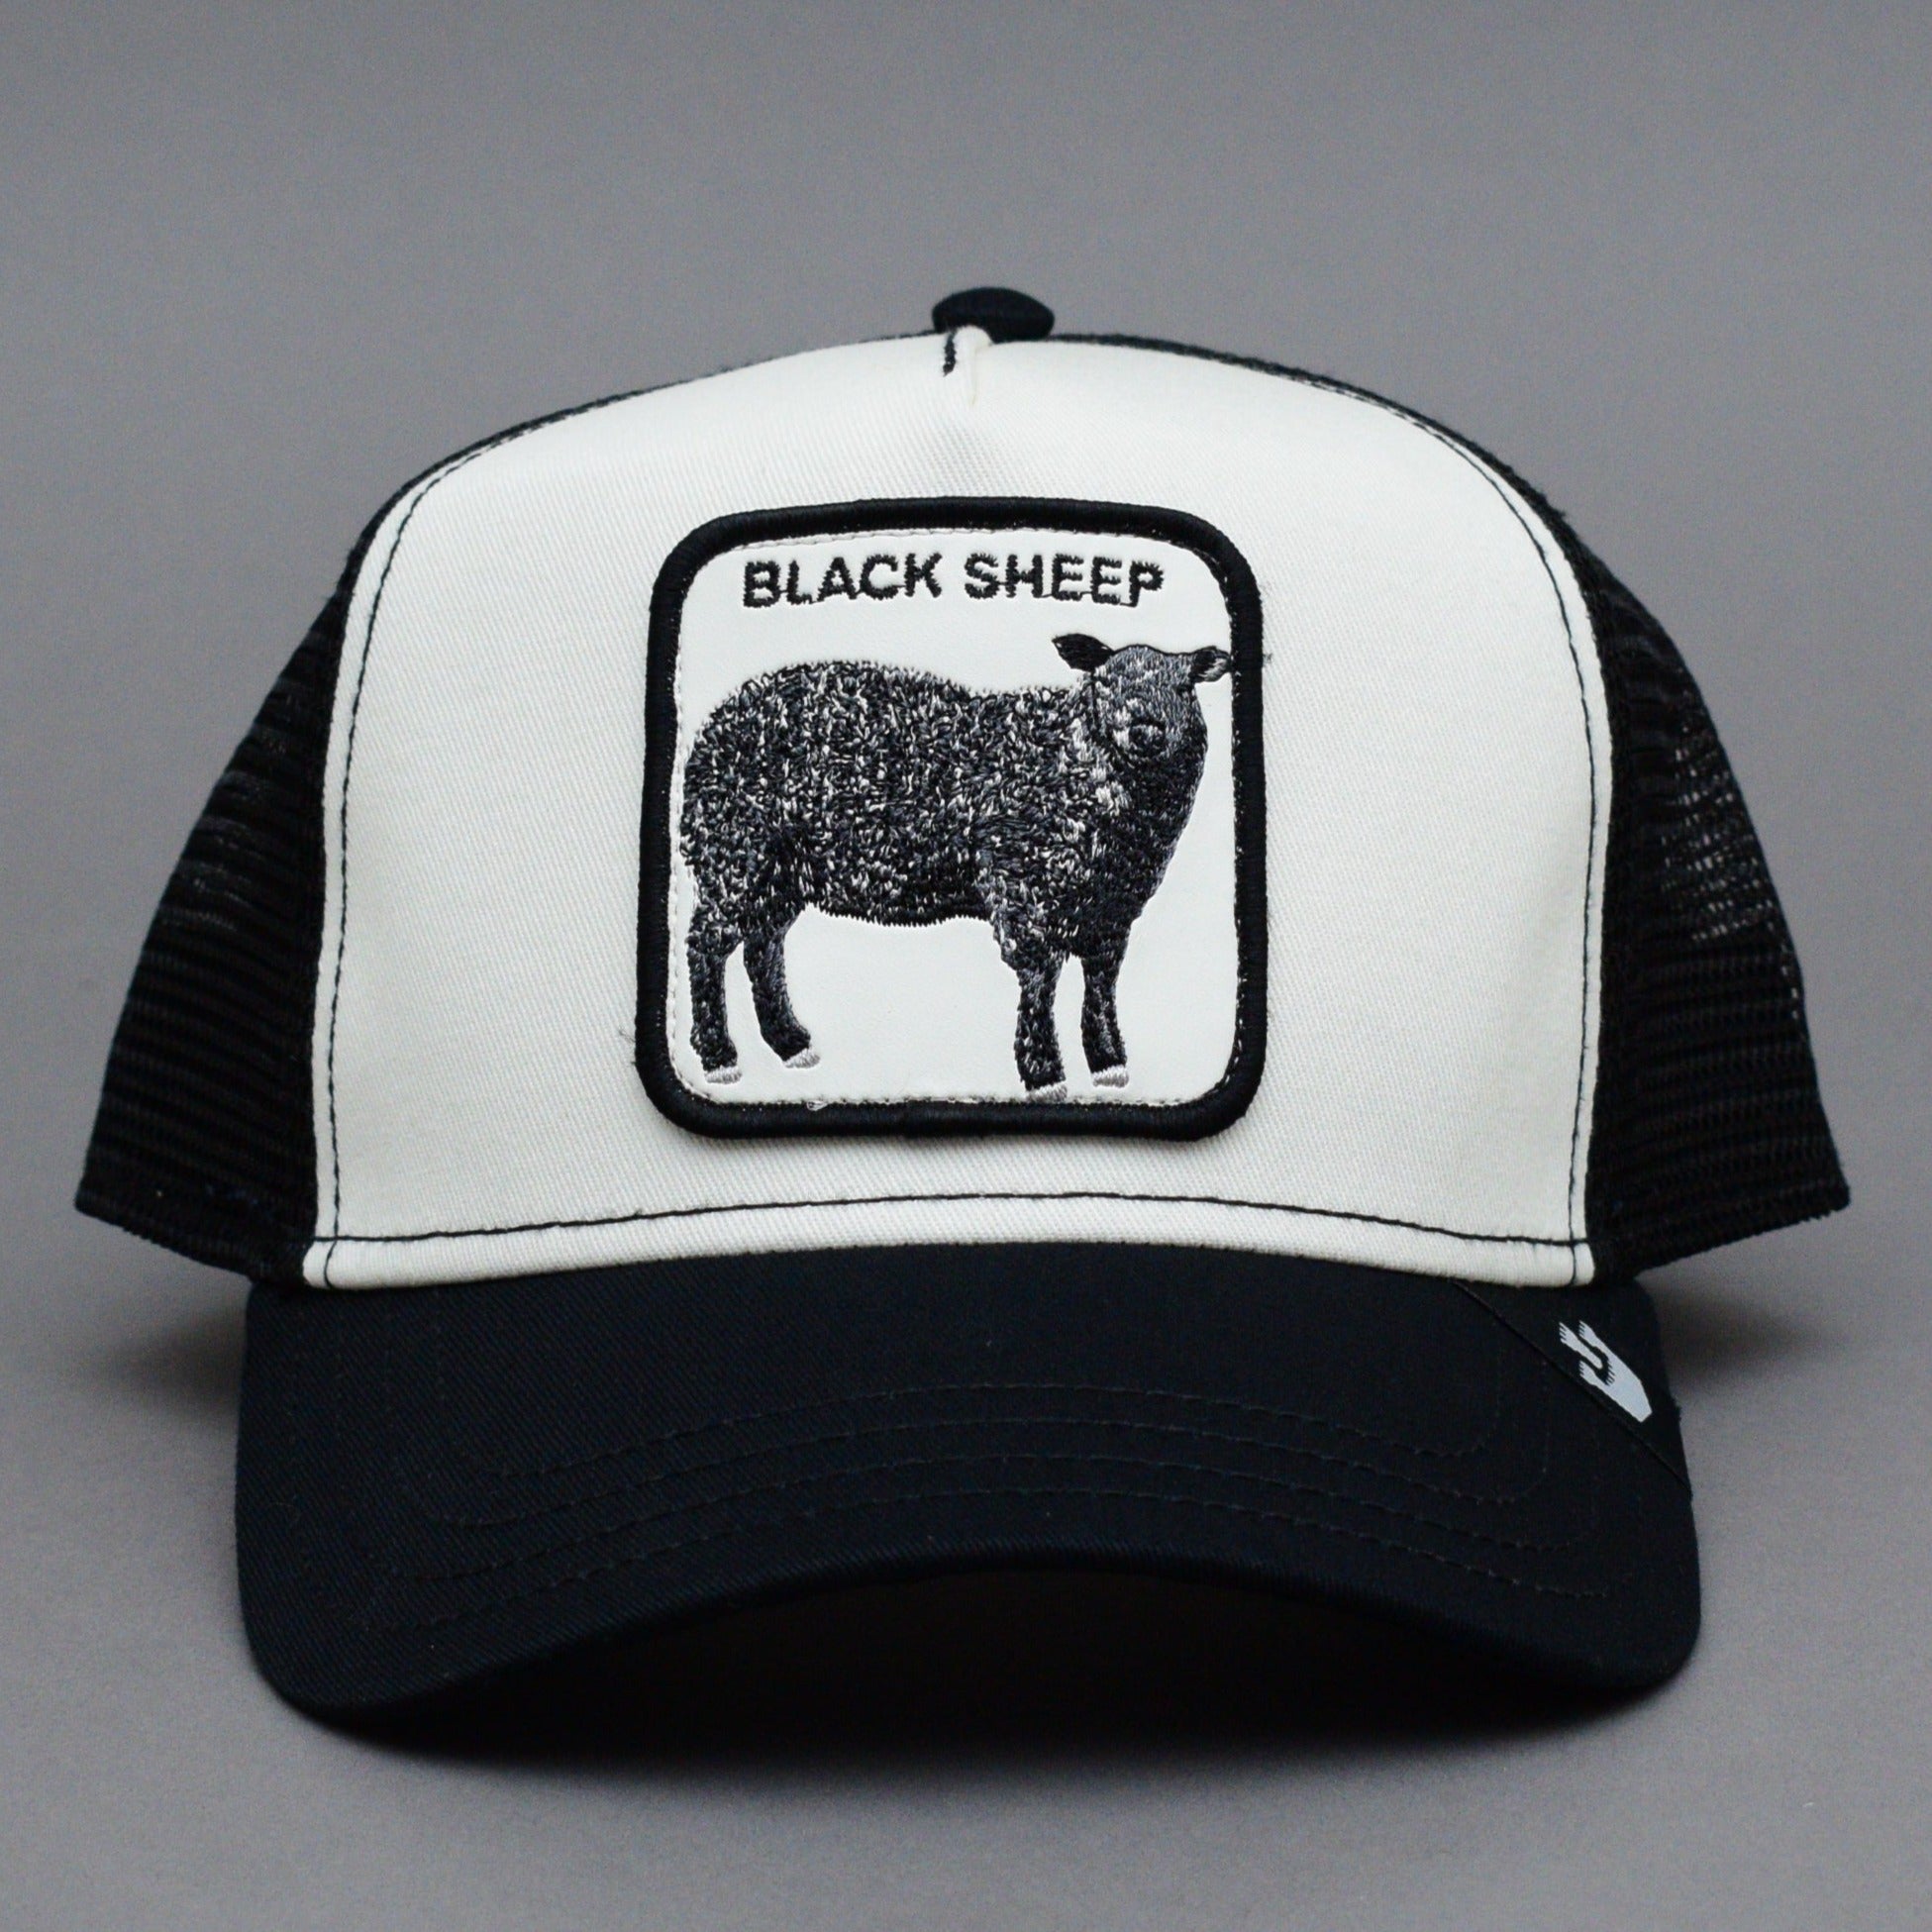 Goorin Bros - Black Sheep - Trucker/Snapback - White/Black